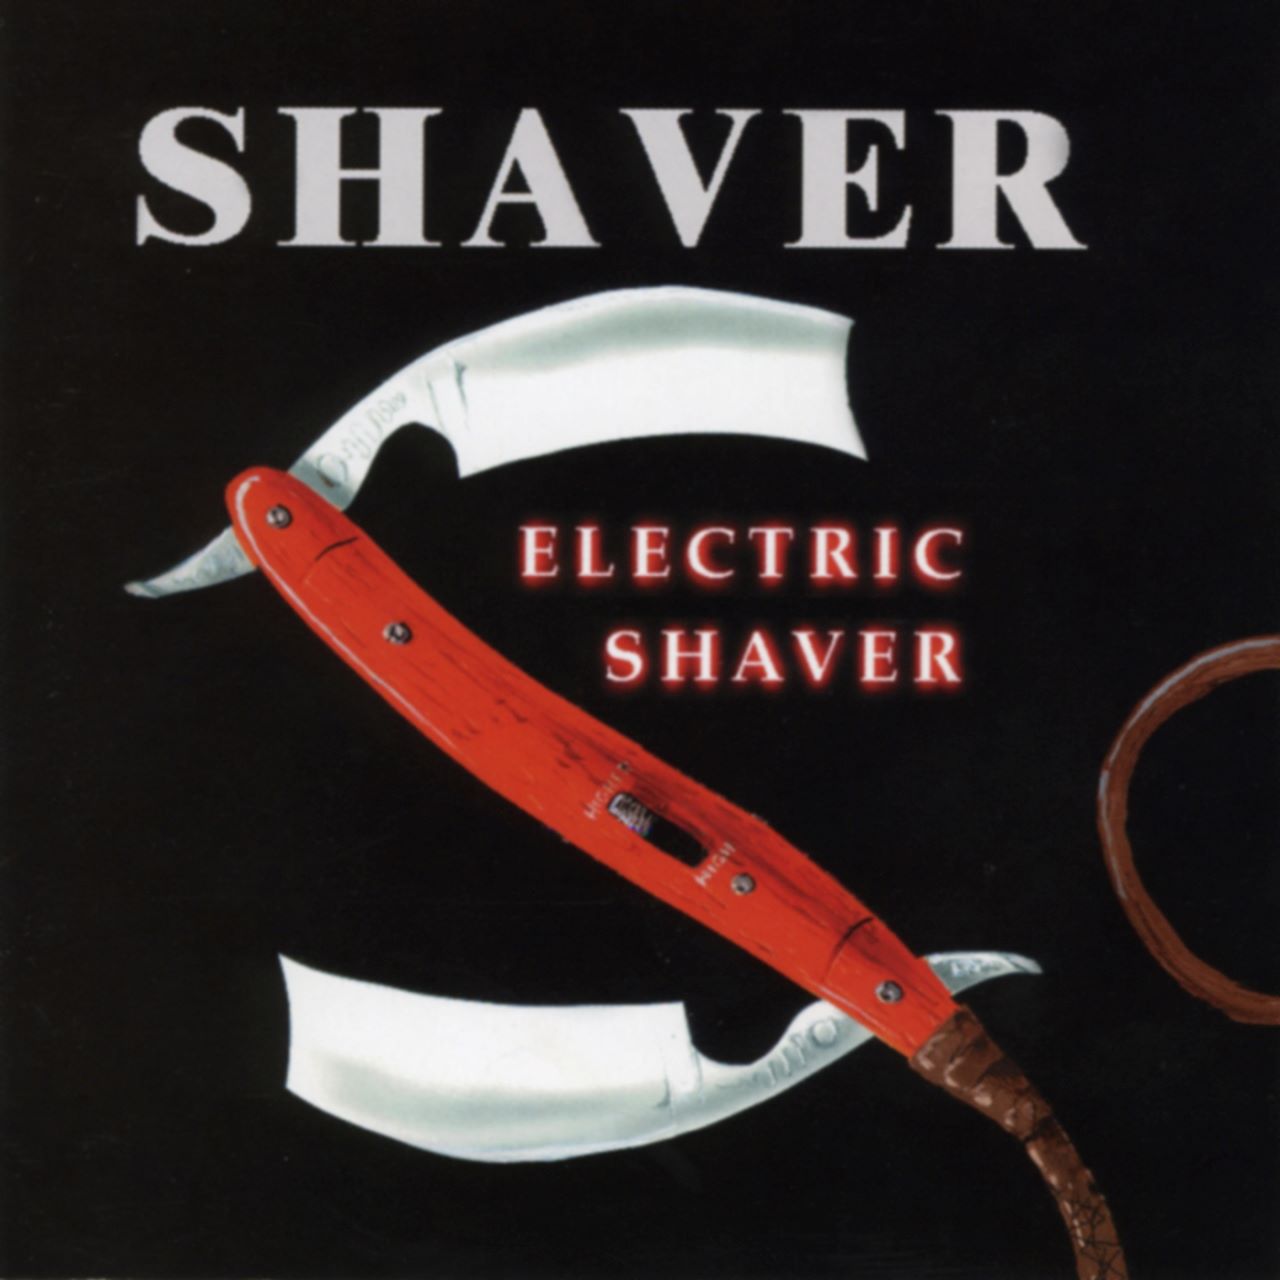 Shaver - Electric Shaver cover album